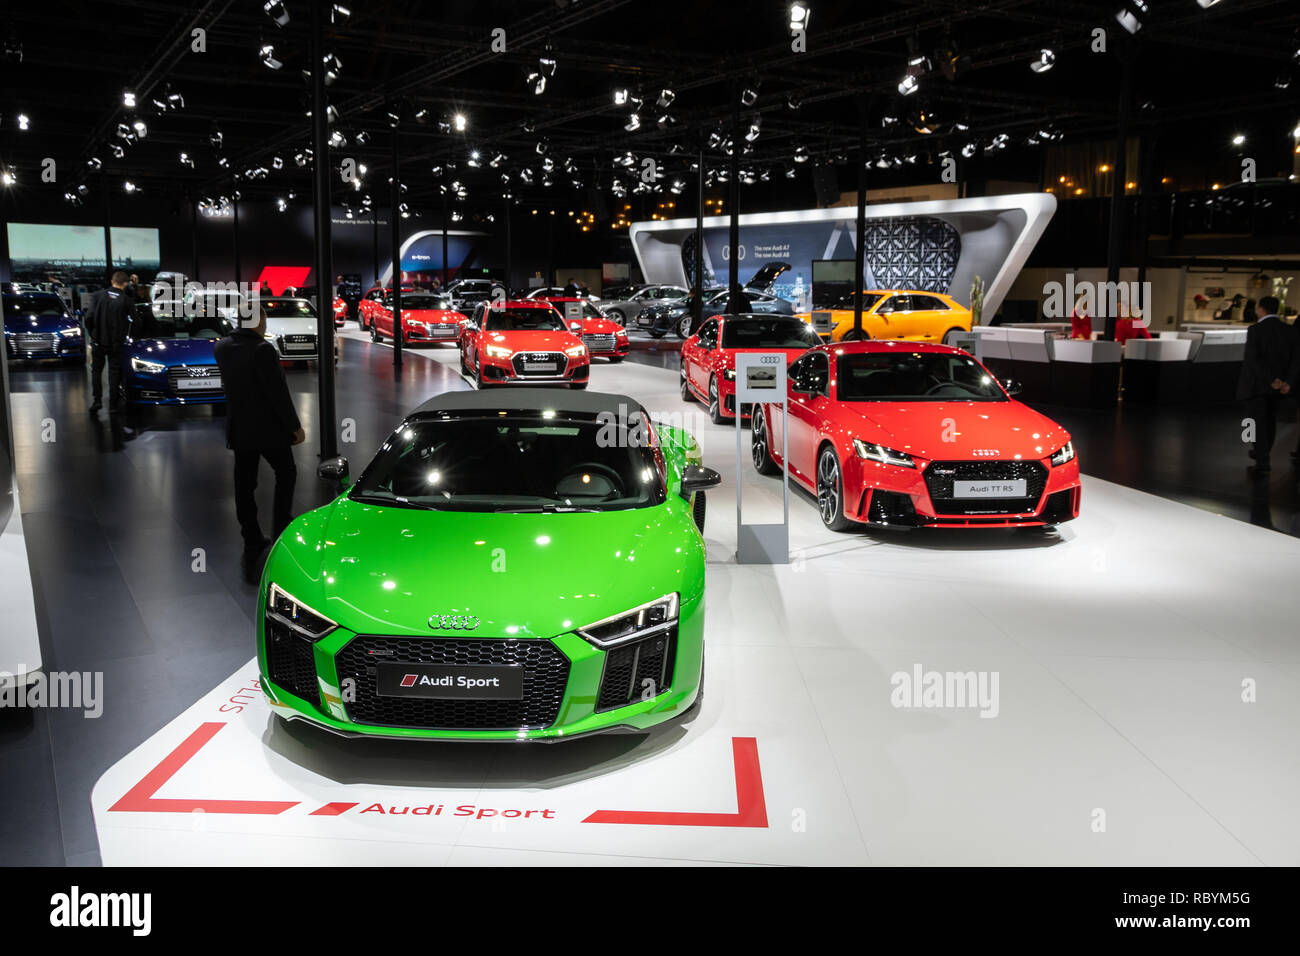 Brüssel - Jan 10, 2018: Audi Sportwagen R8 auf der Brüsseler Expo Autosalon Motor Show präsentiert. Stockfoto